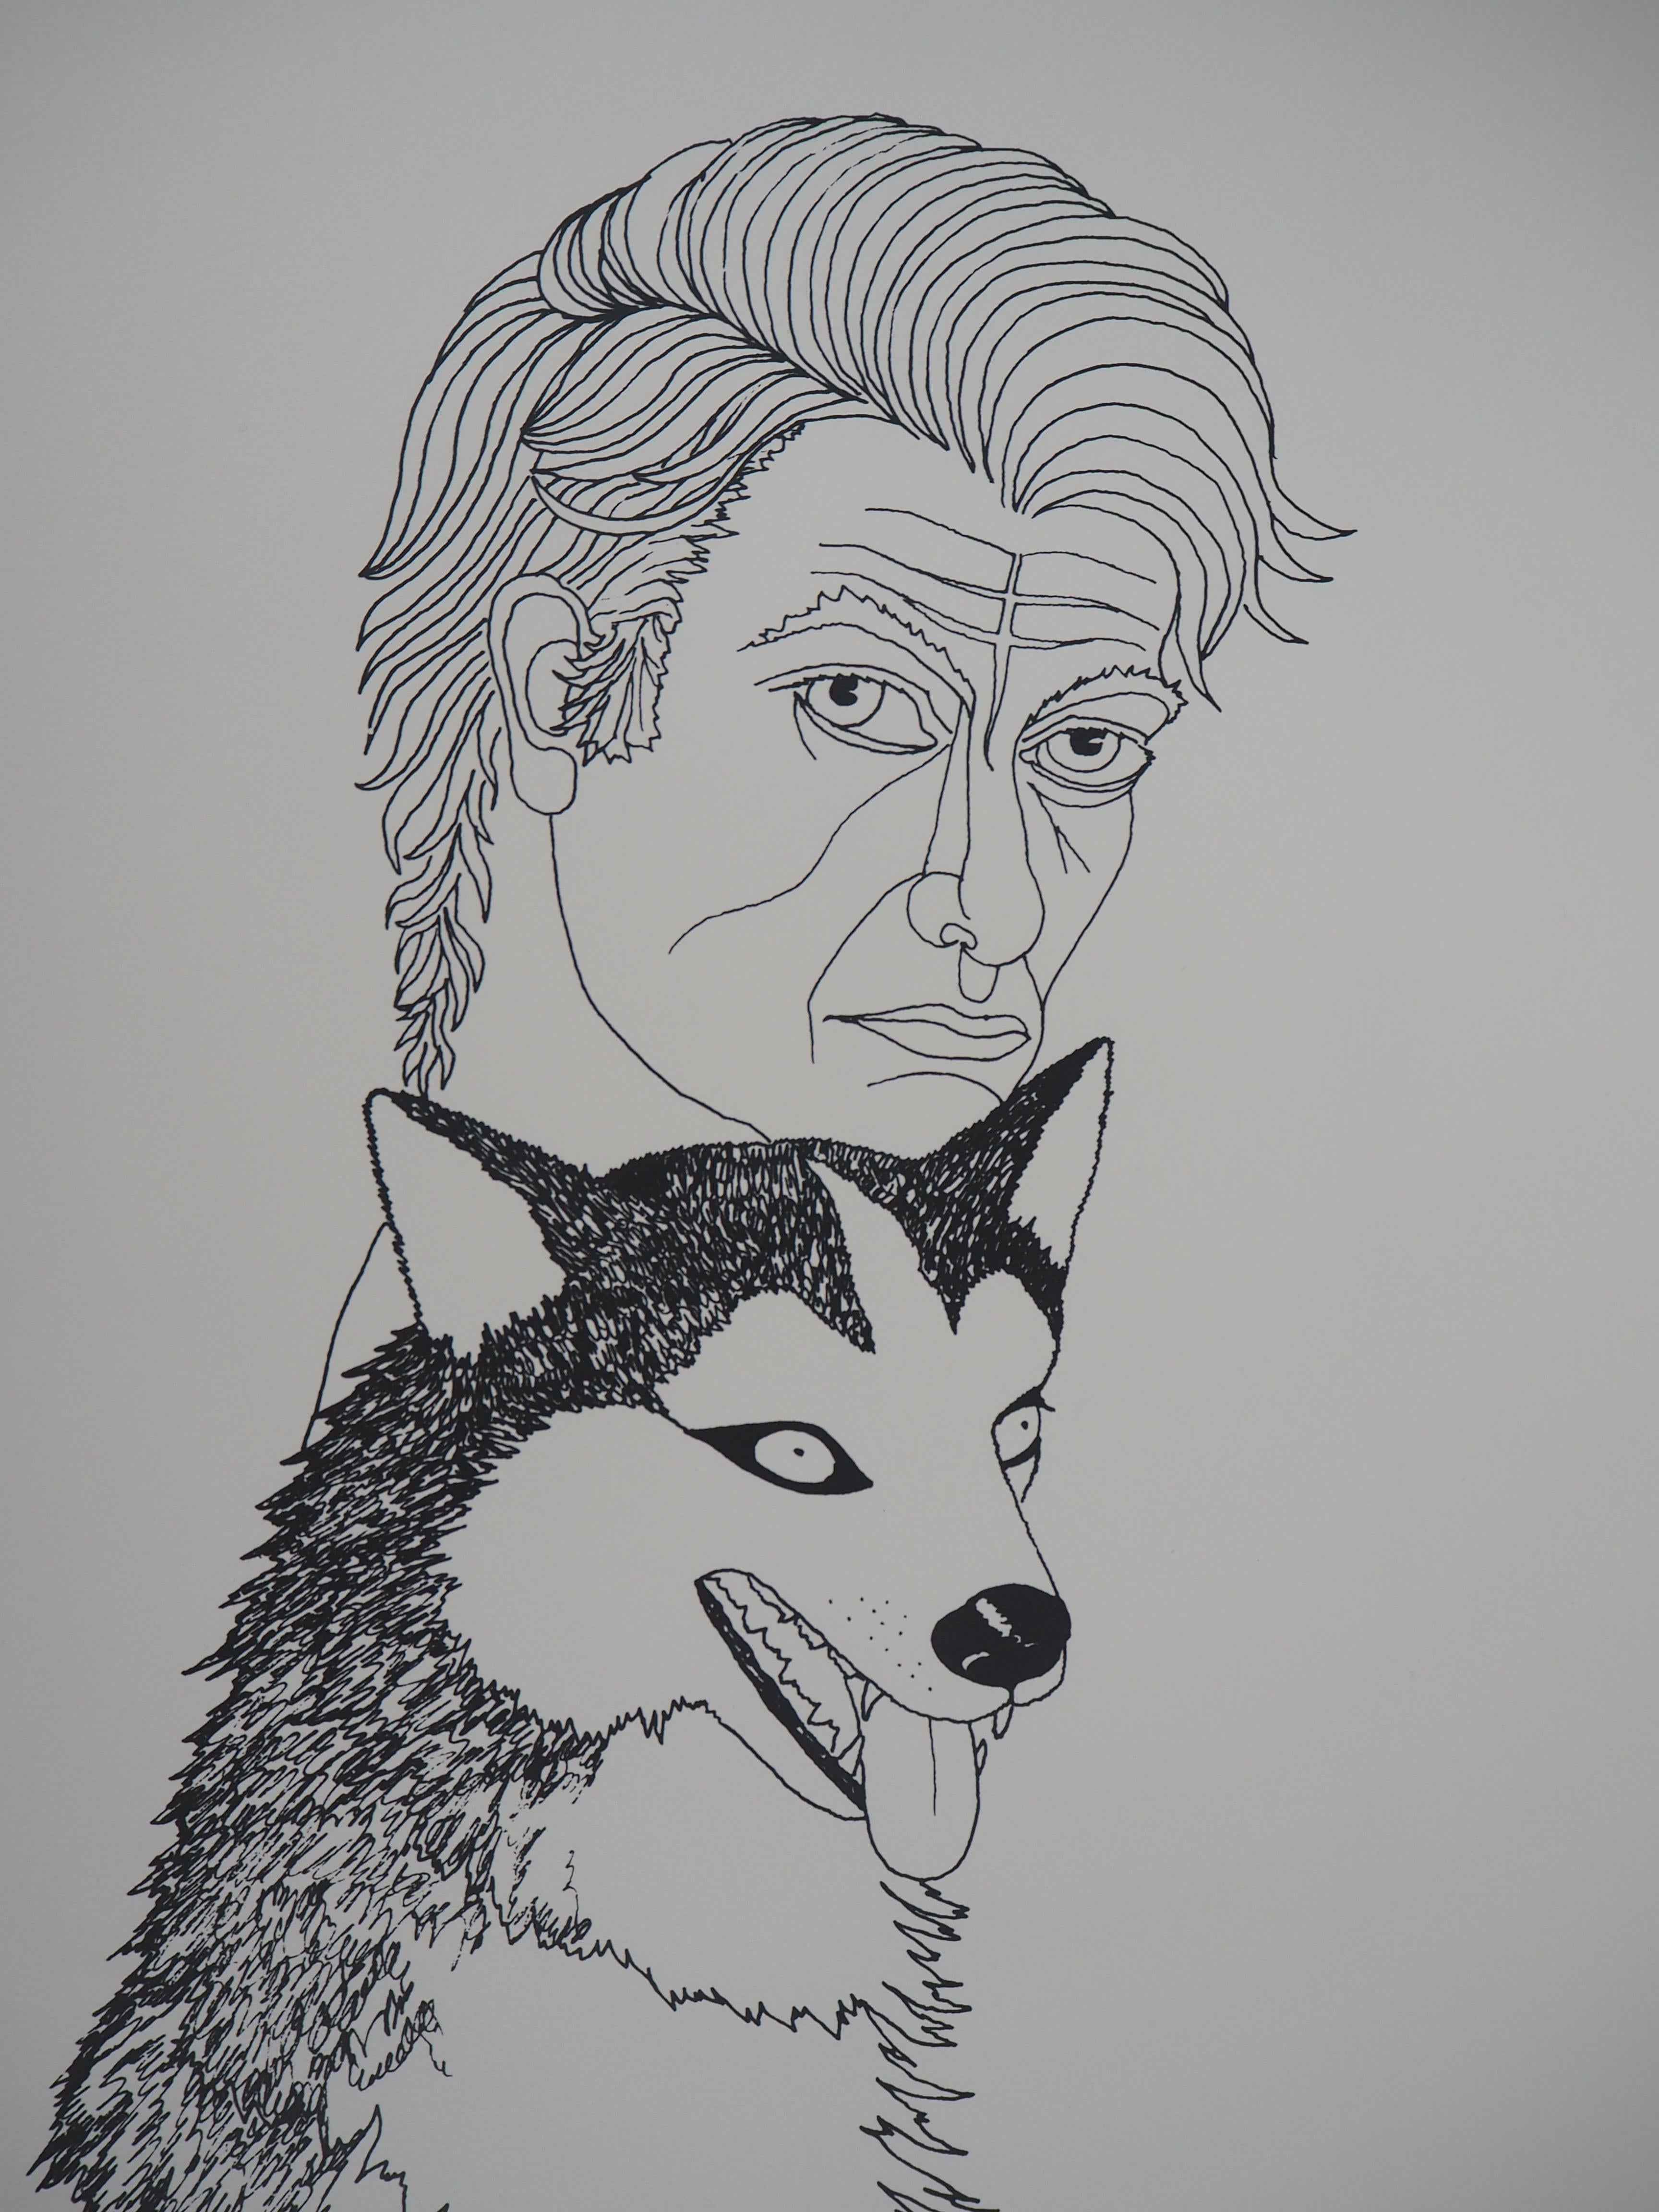 Selfportrait with a Husky Dog - Lithograph, Ltd 50 copies - Modern Print by Jean Marais